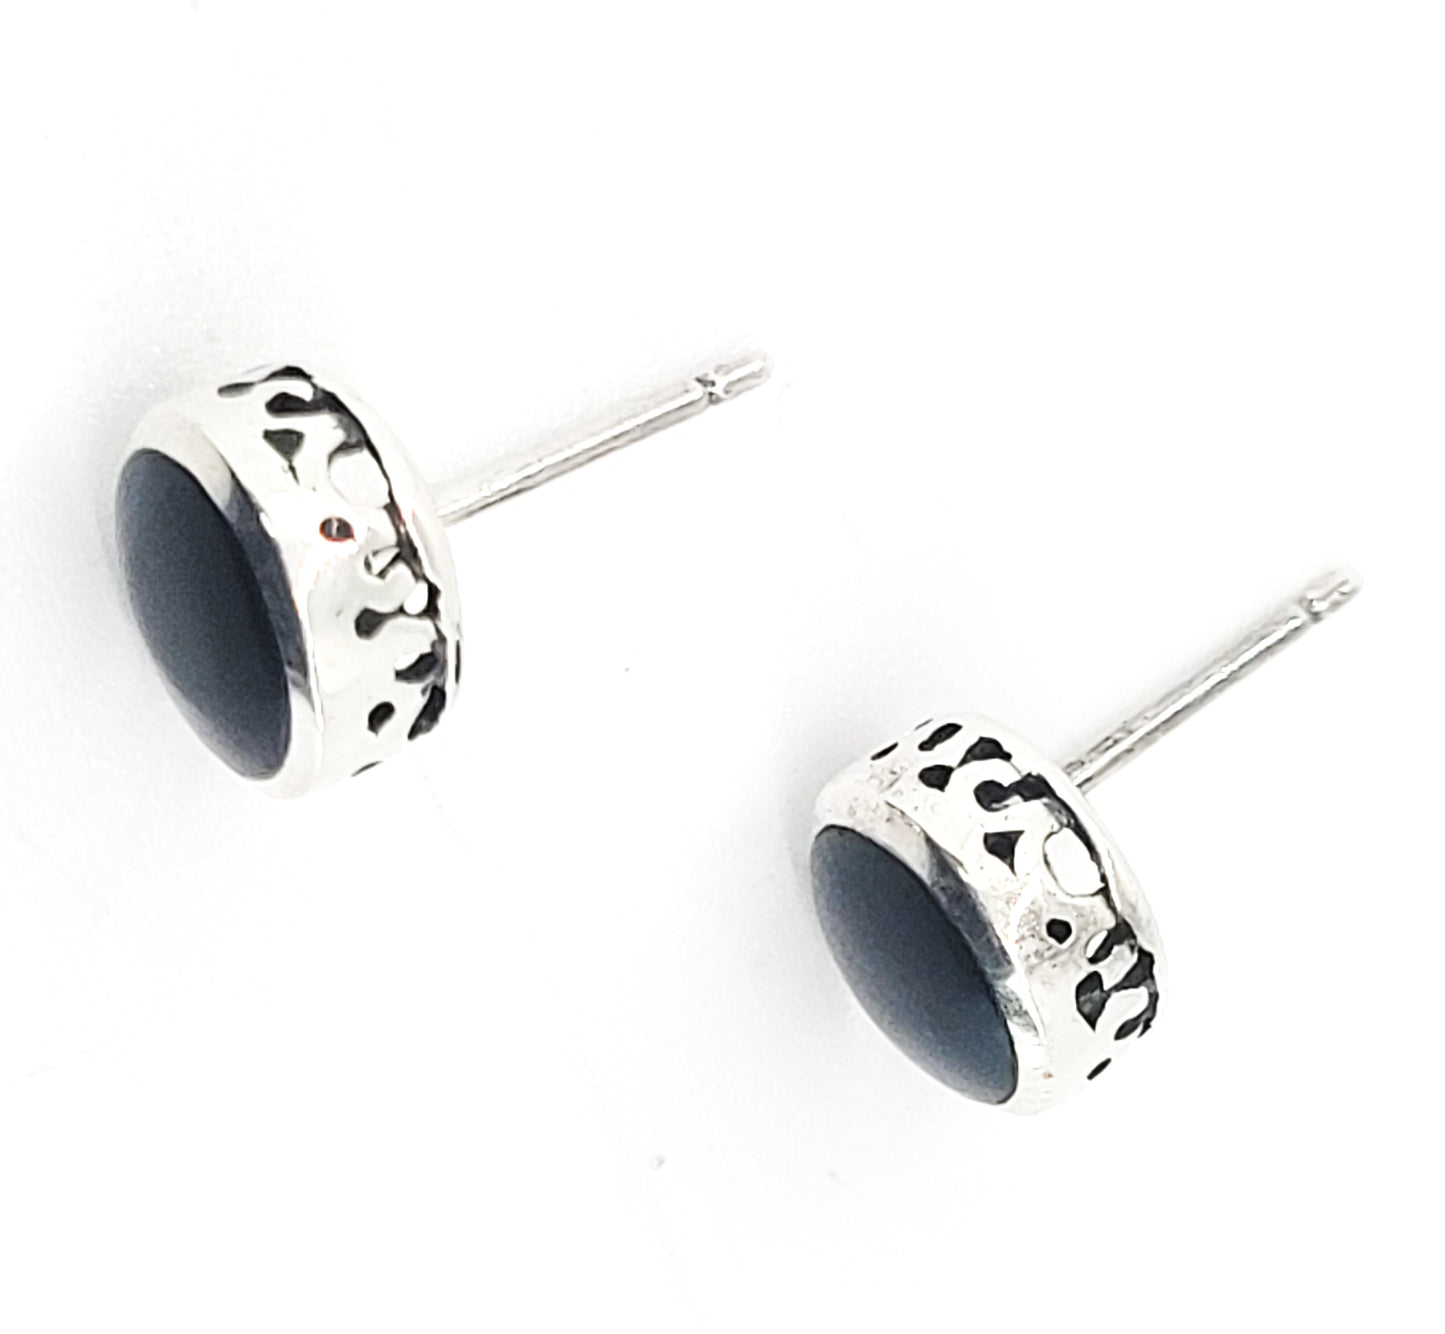 Black onyx and sterling silver open work filigree vintage stud earrings